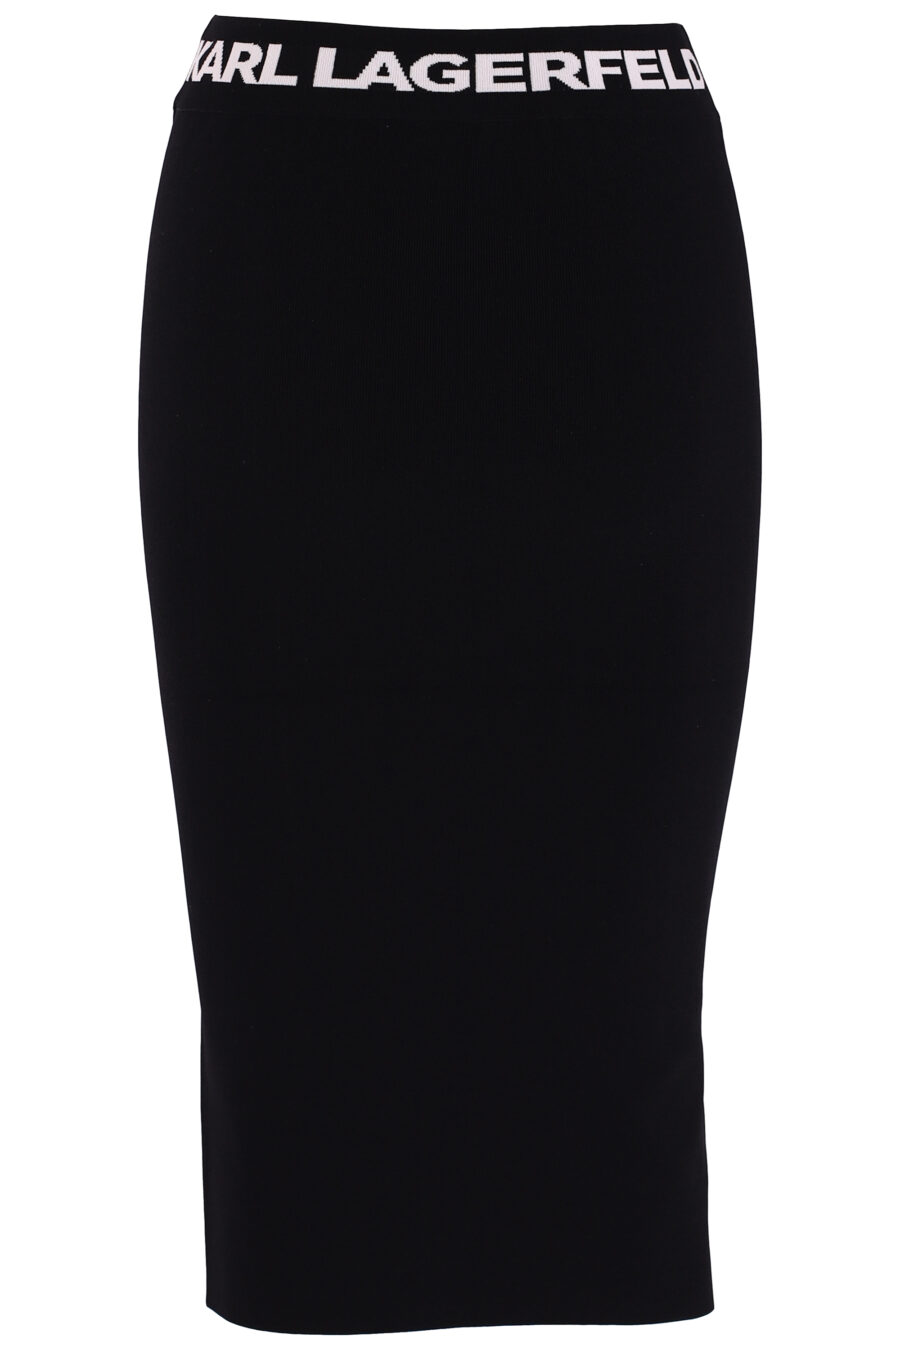 Falda negra midi con logo en cinta - IMG 3715